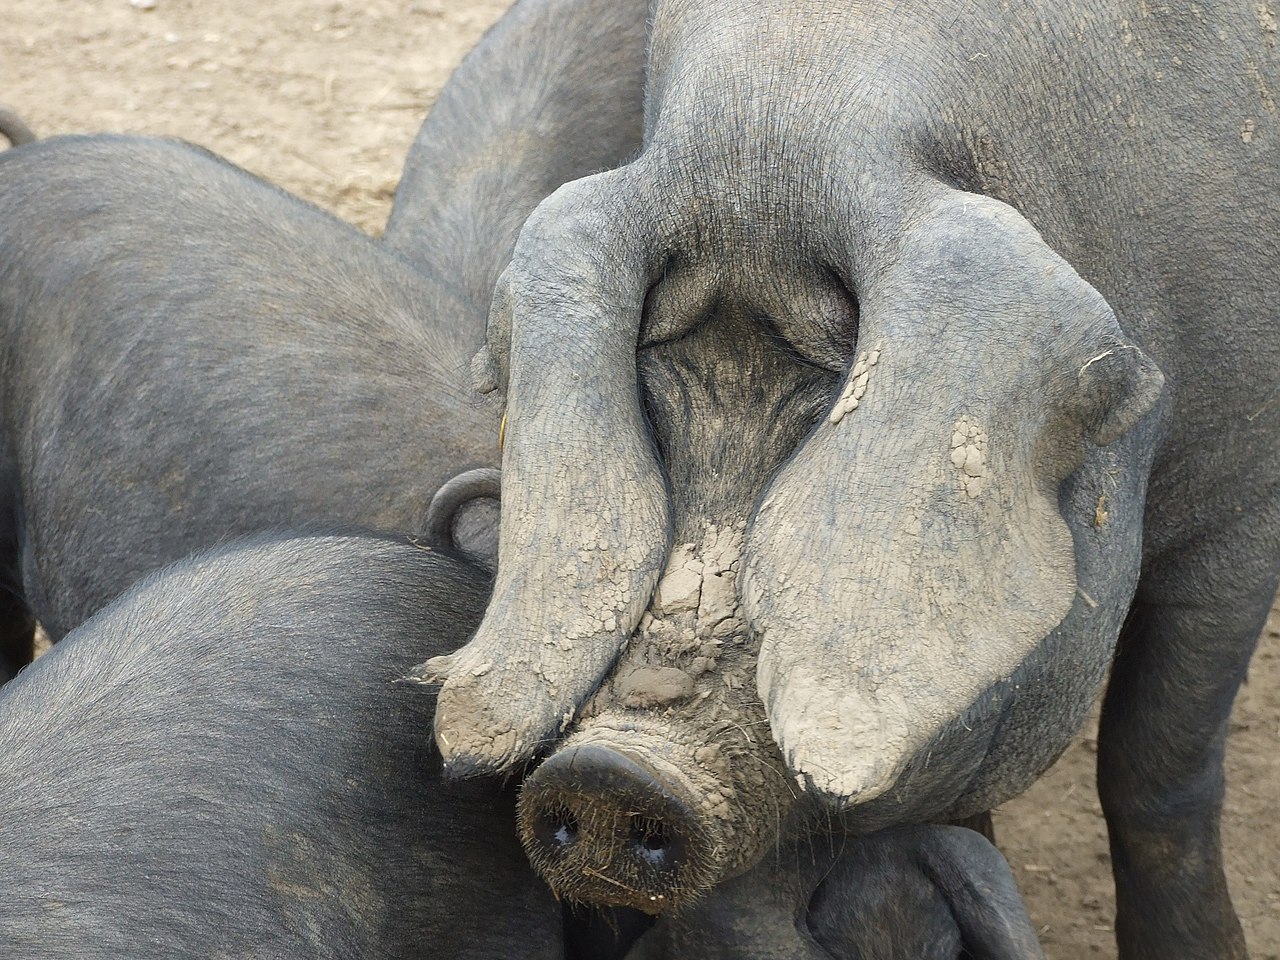 Large Black Pig, ears covering his eyes